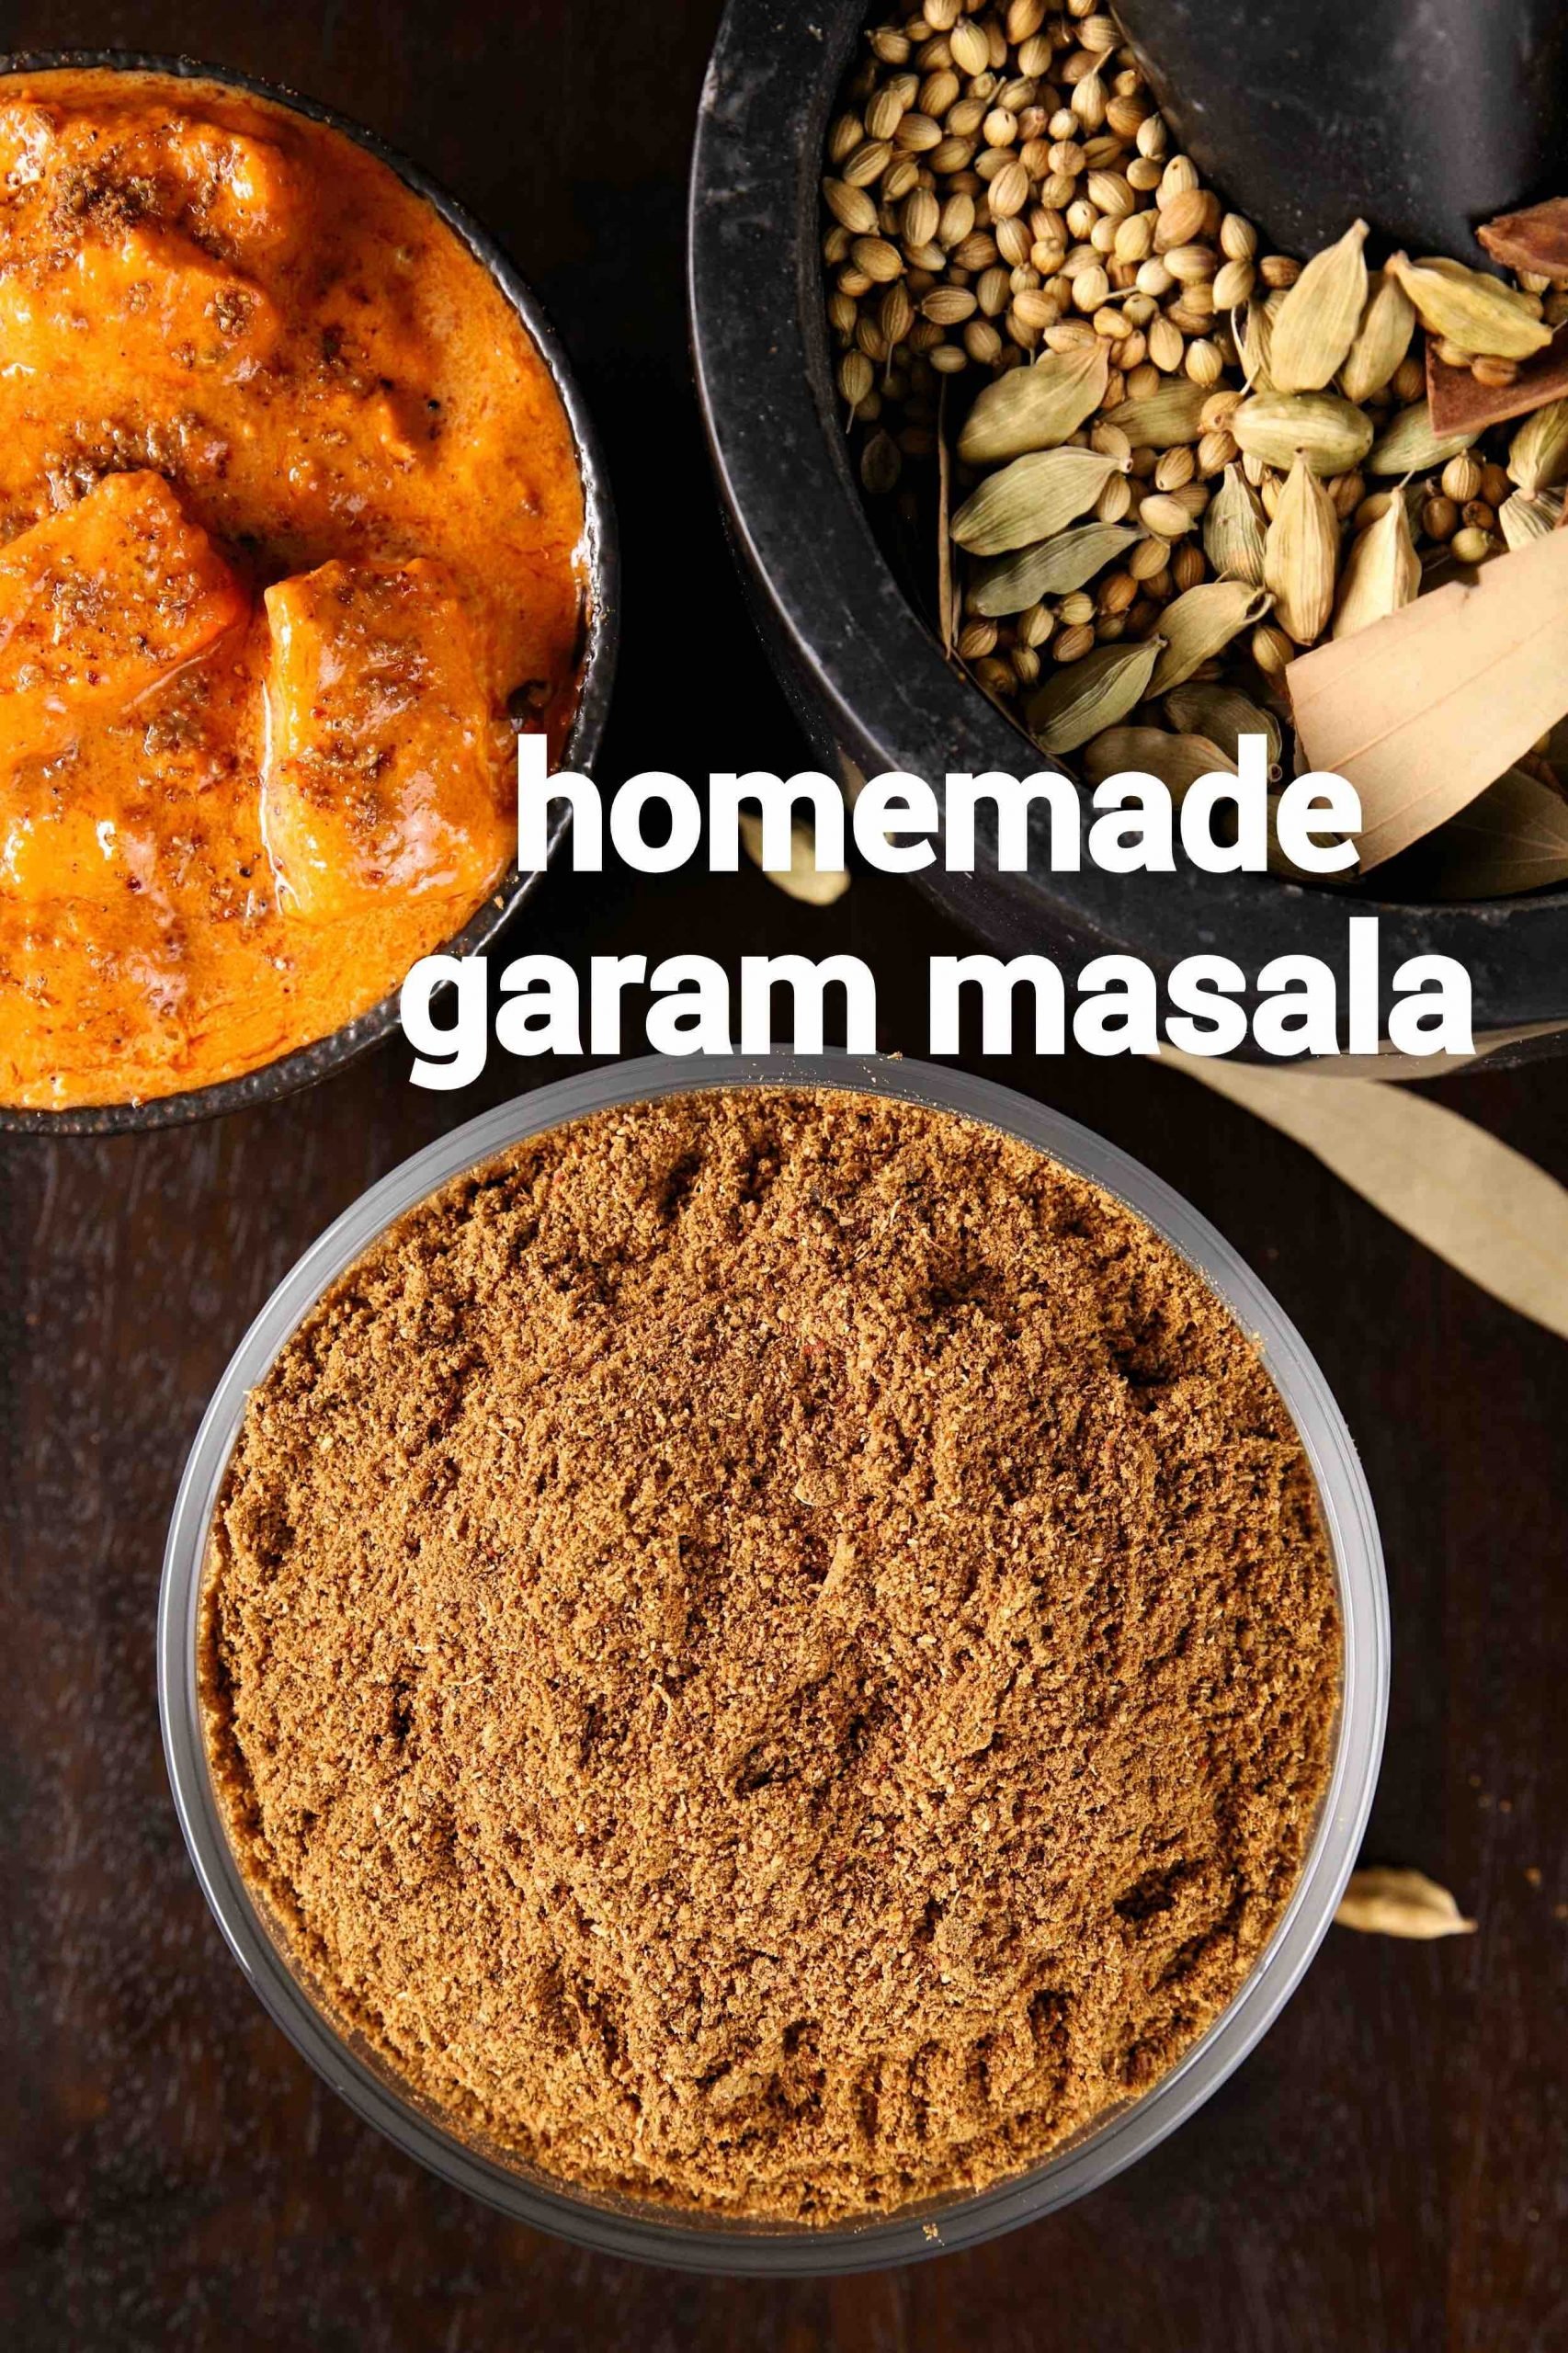 garam masala recipe  how to make homemade garam masala spice mix powder